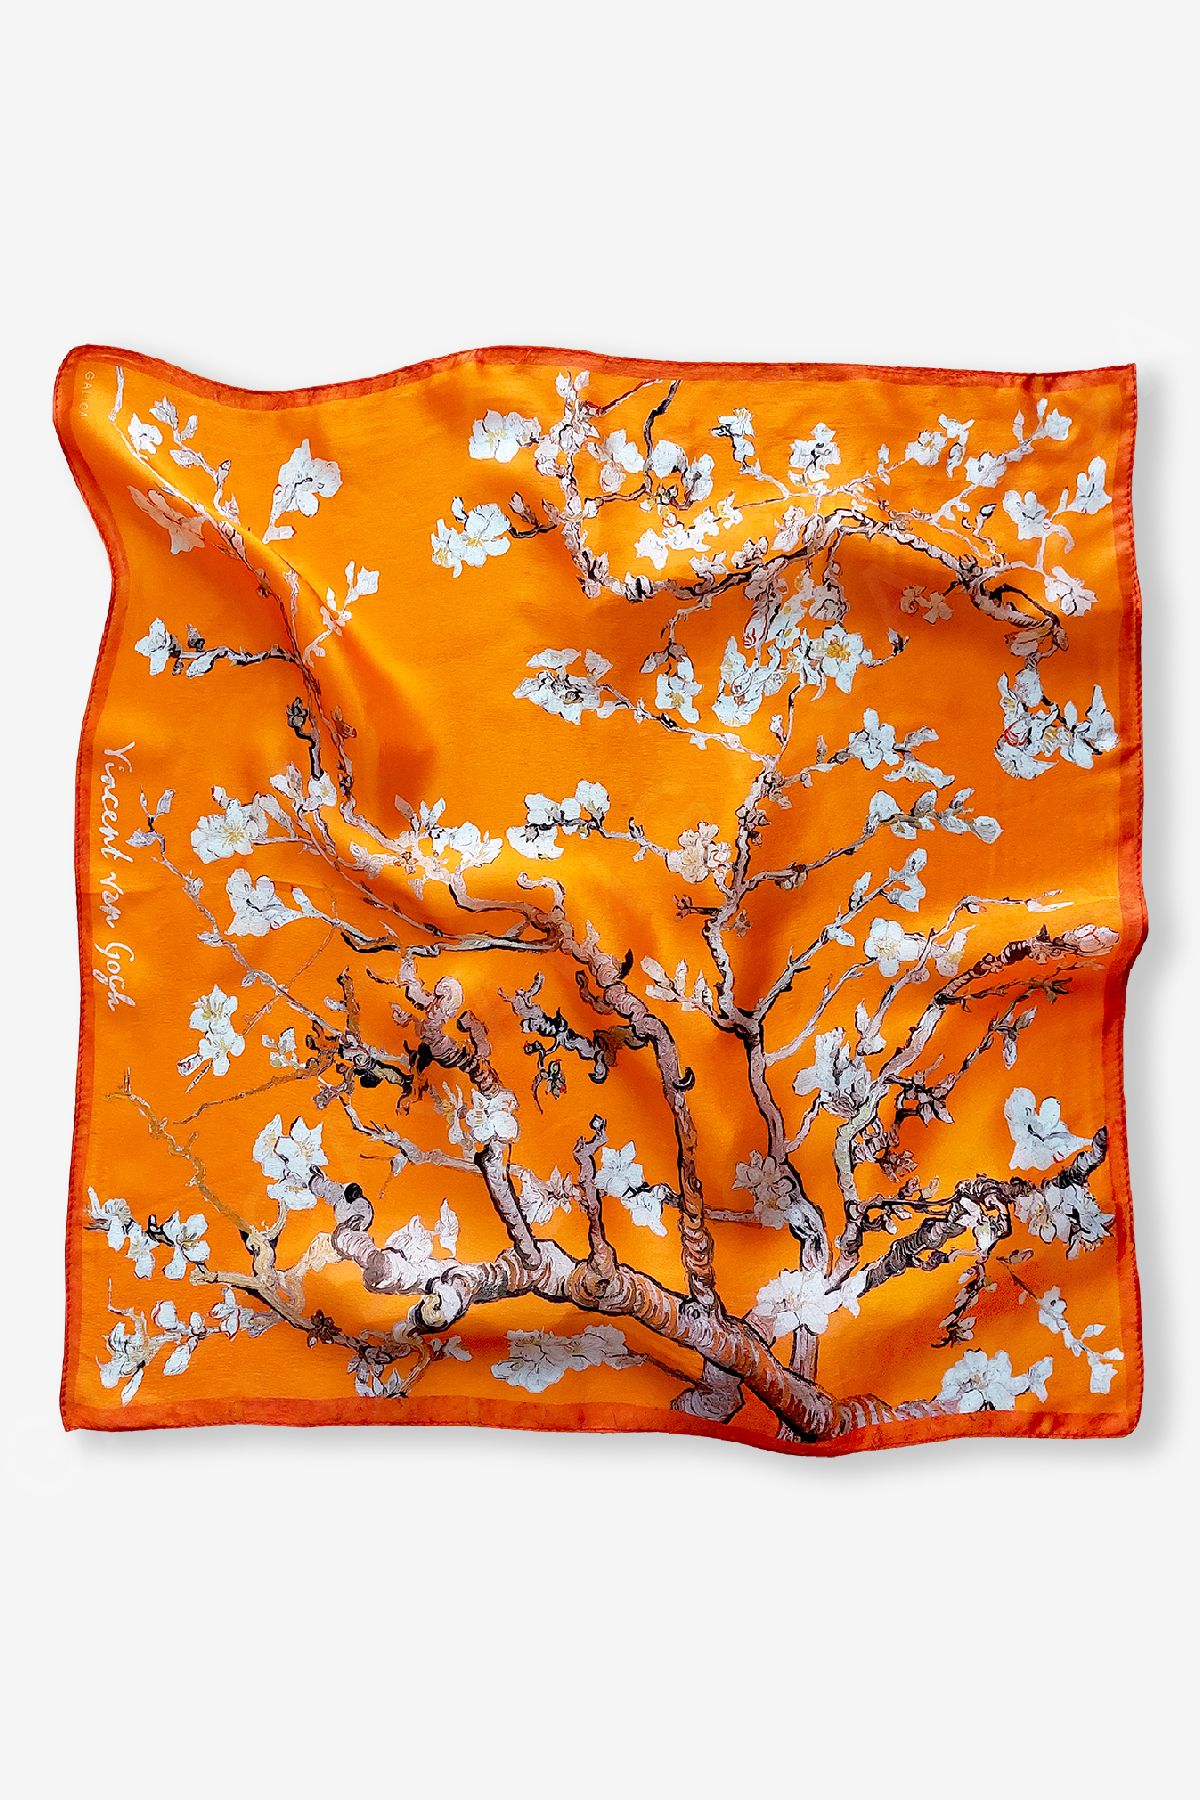 Galiga Van Gogh-almond Orange %100 Ipek Fular 55x55cm 'art On Silk'